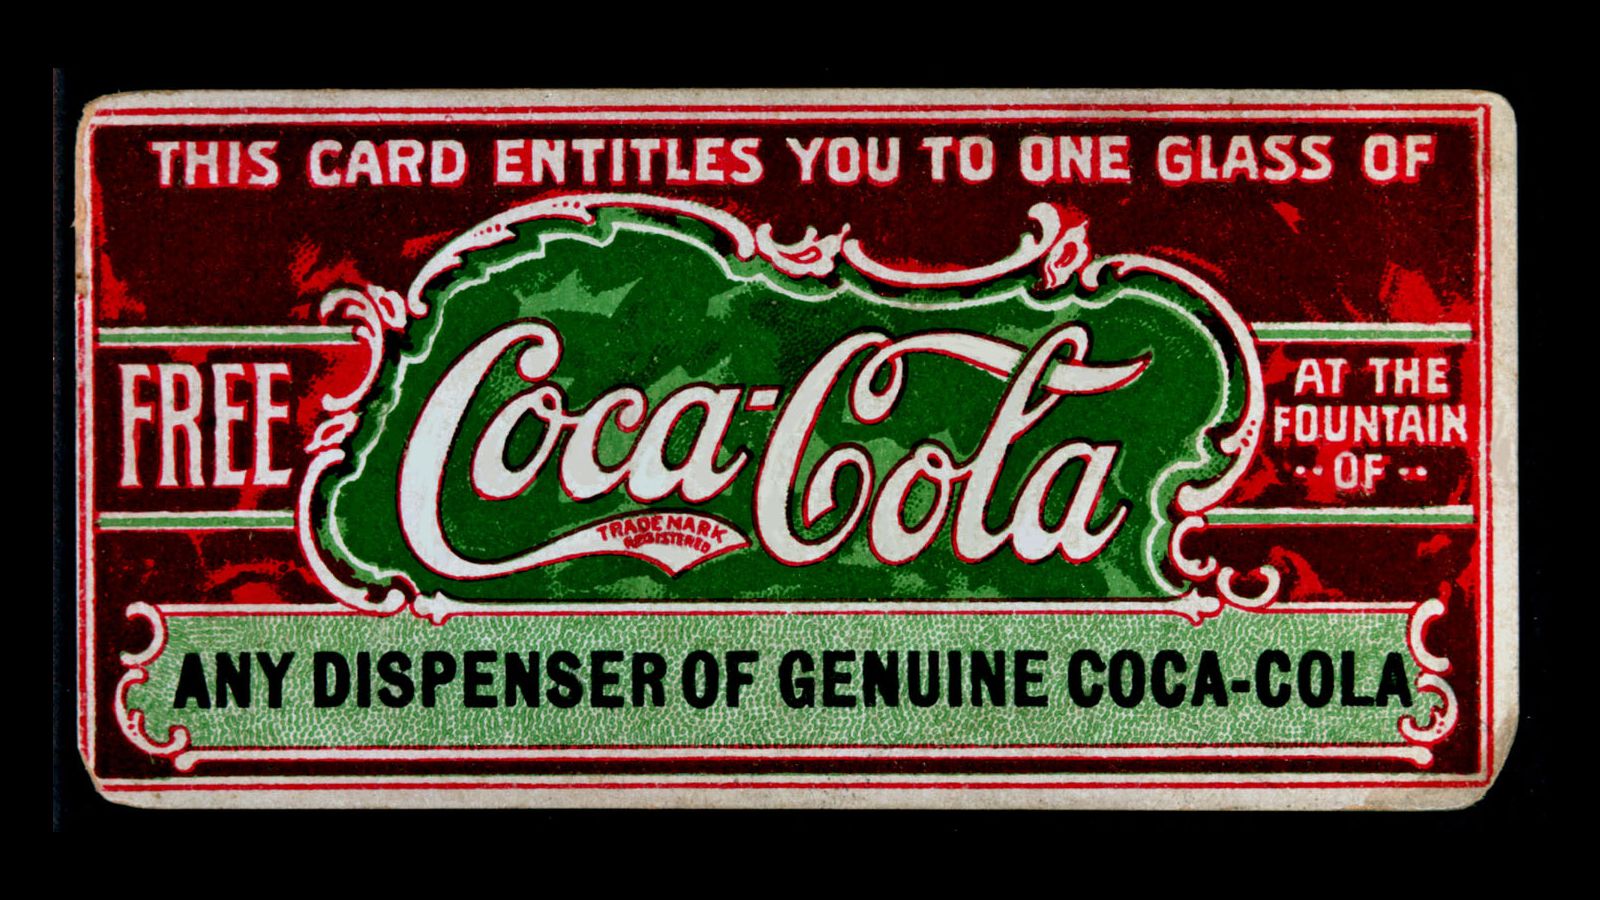 coca cola advertisement